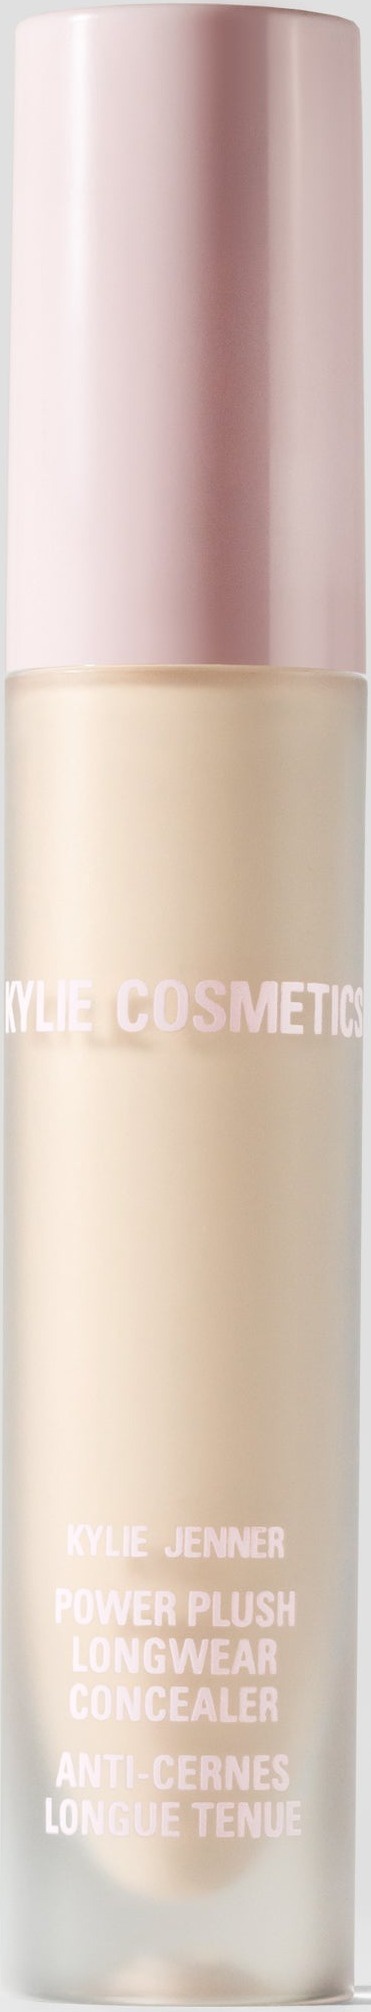 Kylie Cosmetics Power Plush Longwear Concealer